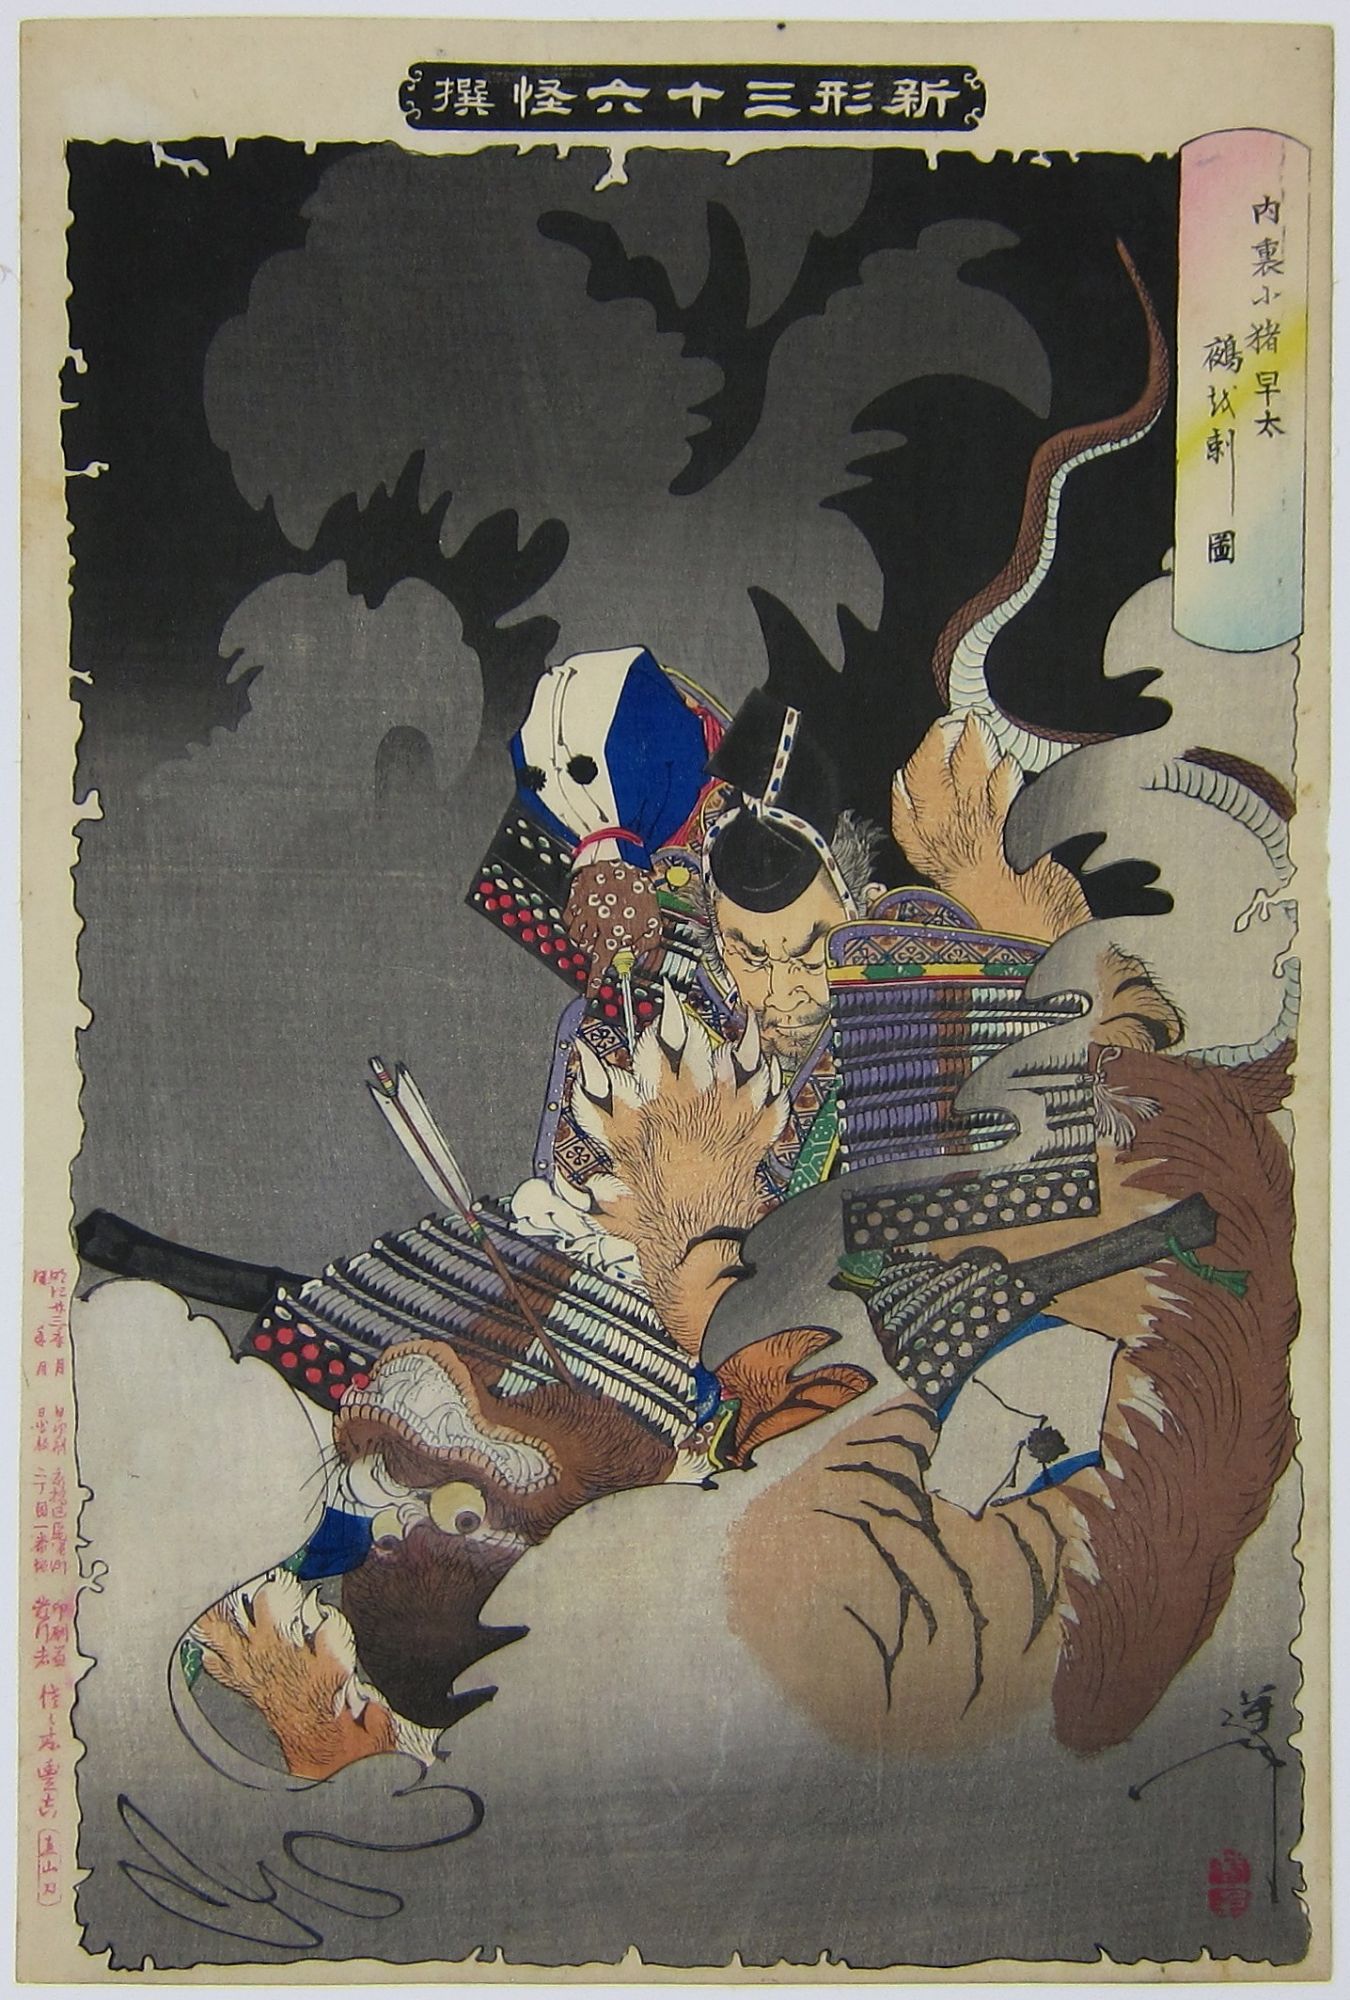 Ii no Hayata Kills the Nue at the Imperial Palace.  1890.